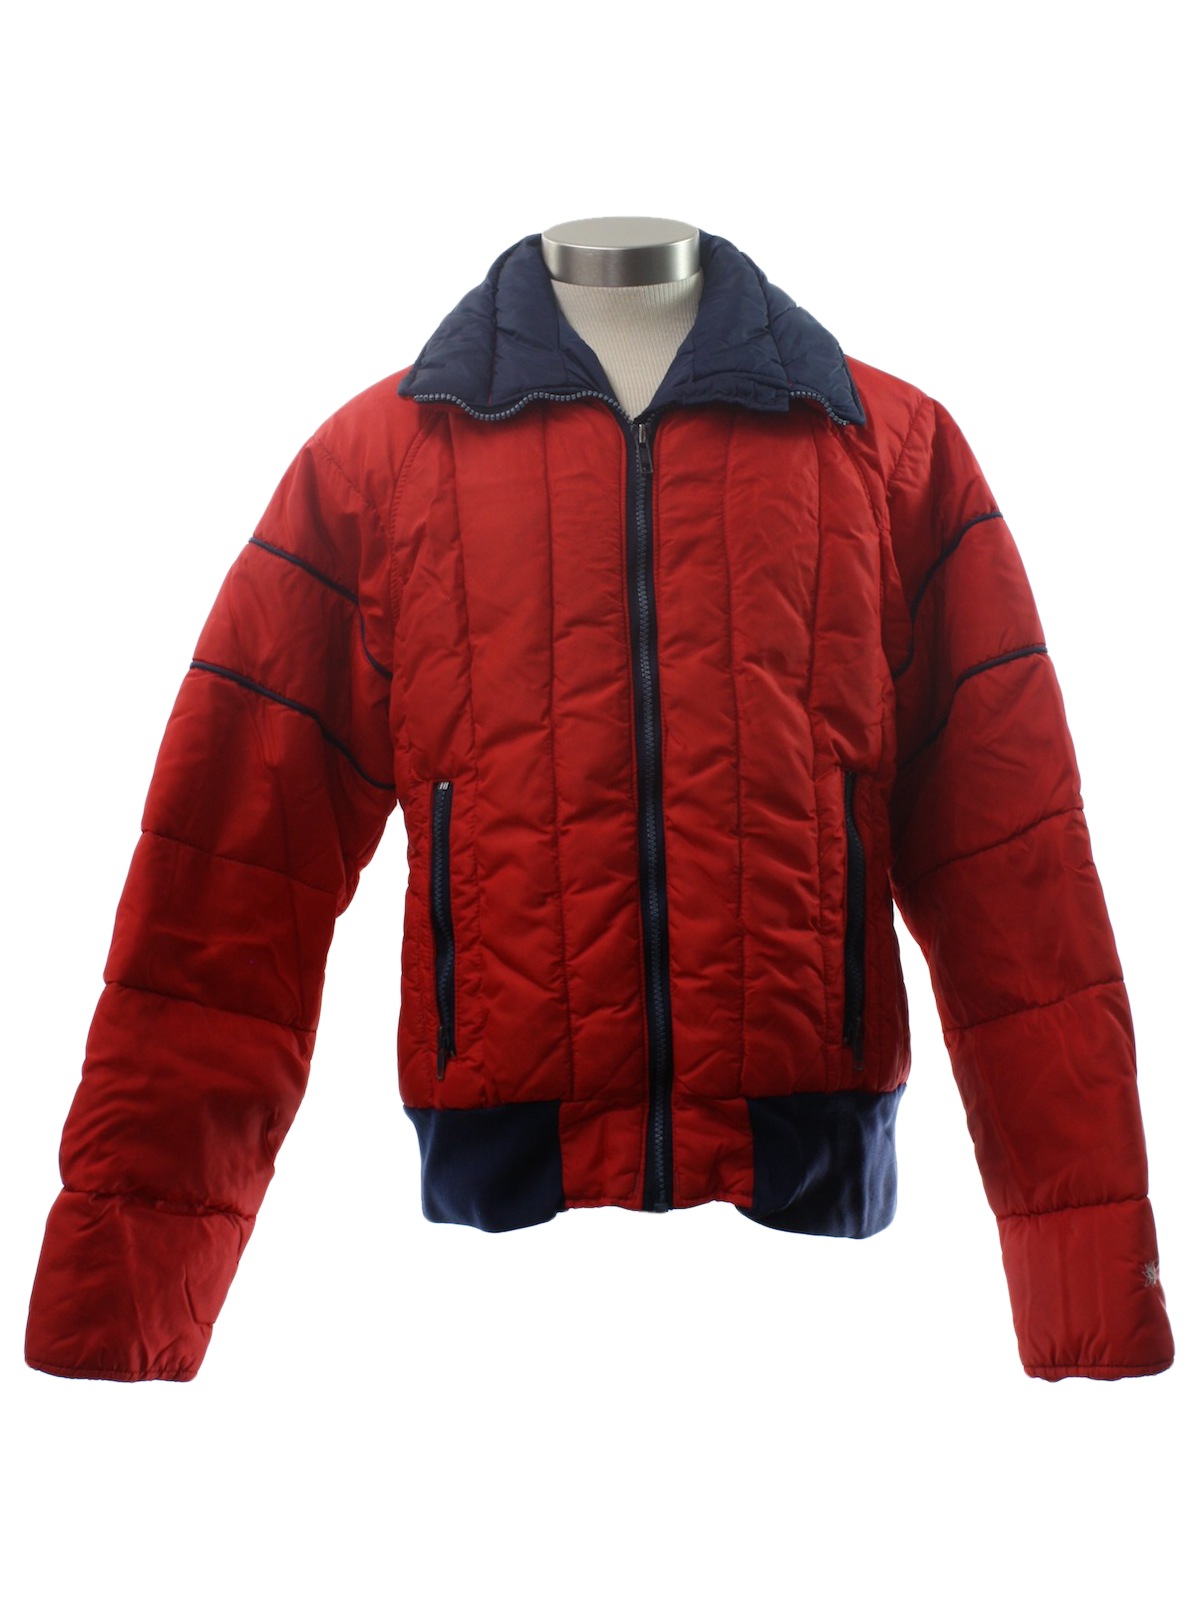 1980's Retro Jacket: 80s -Alpine Designs- Mens red background nylon ...